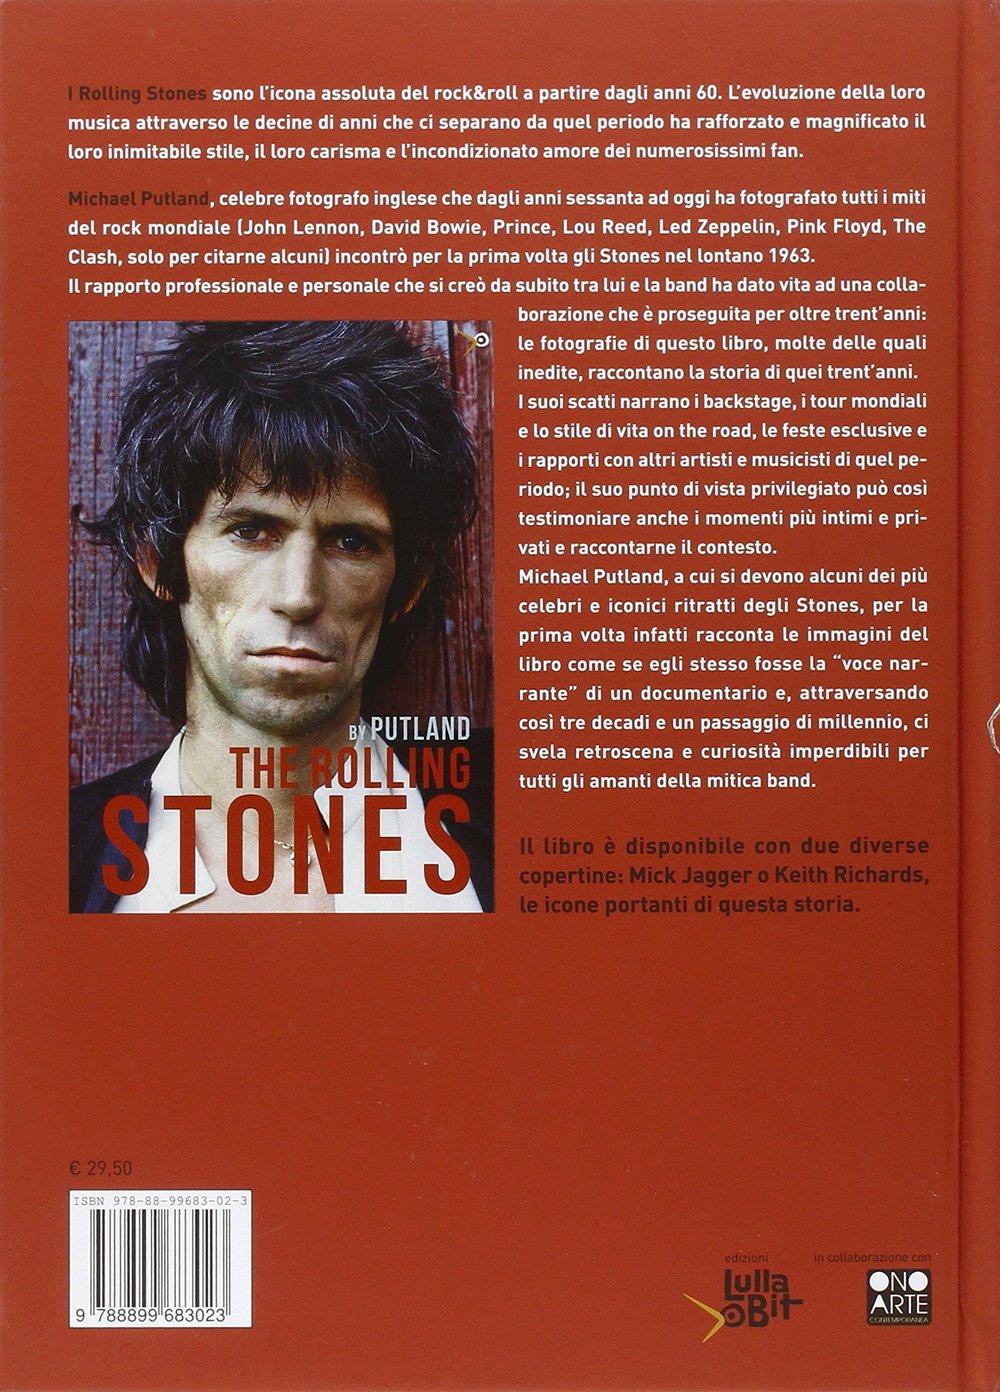 The Rolling Stones by Putland. Ediz. illustrata